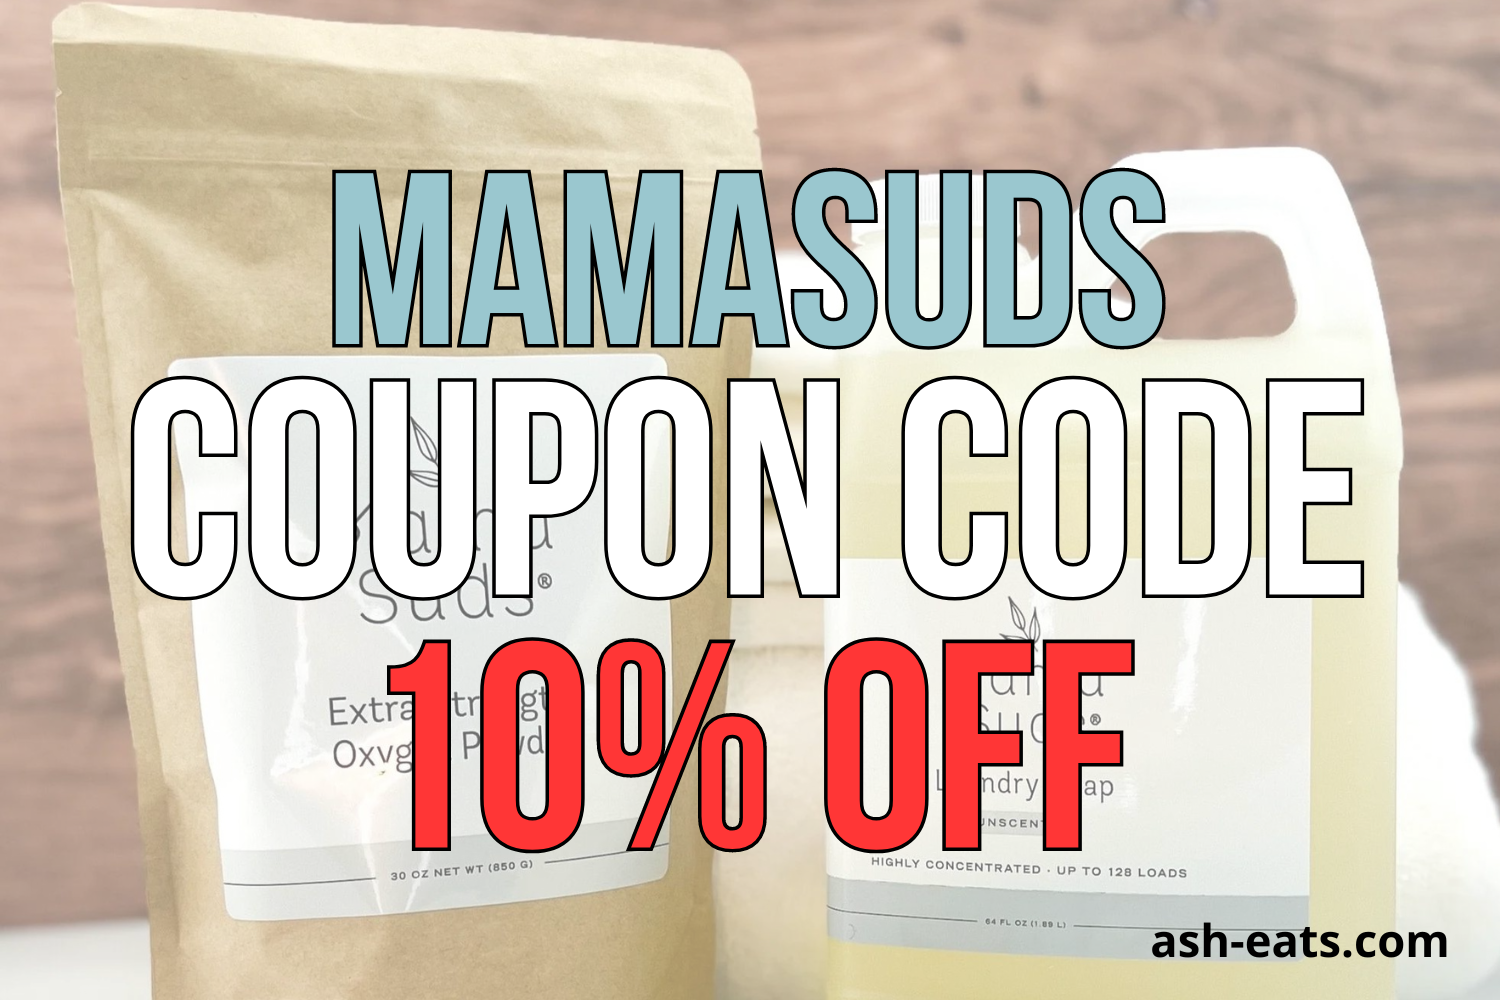 mamasuds coupon code